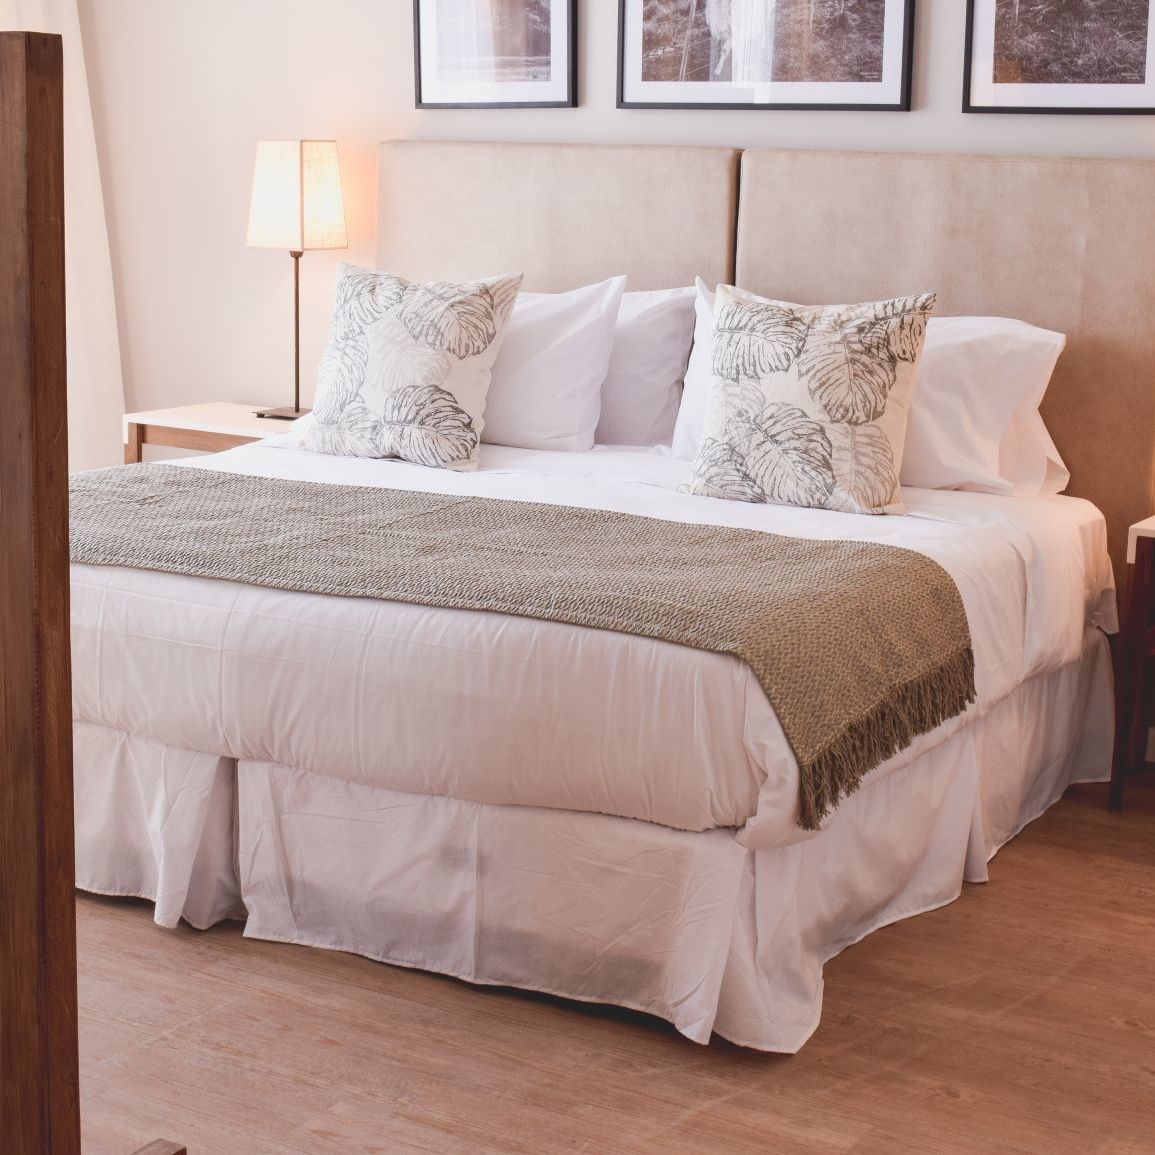 Bedroom arrangement in Executive Suite at DOT Hotels